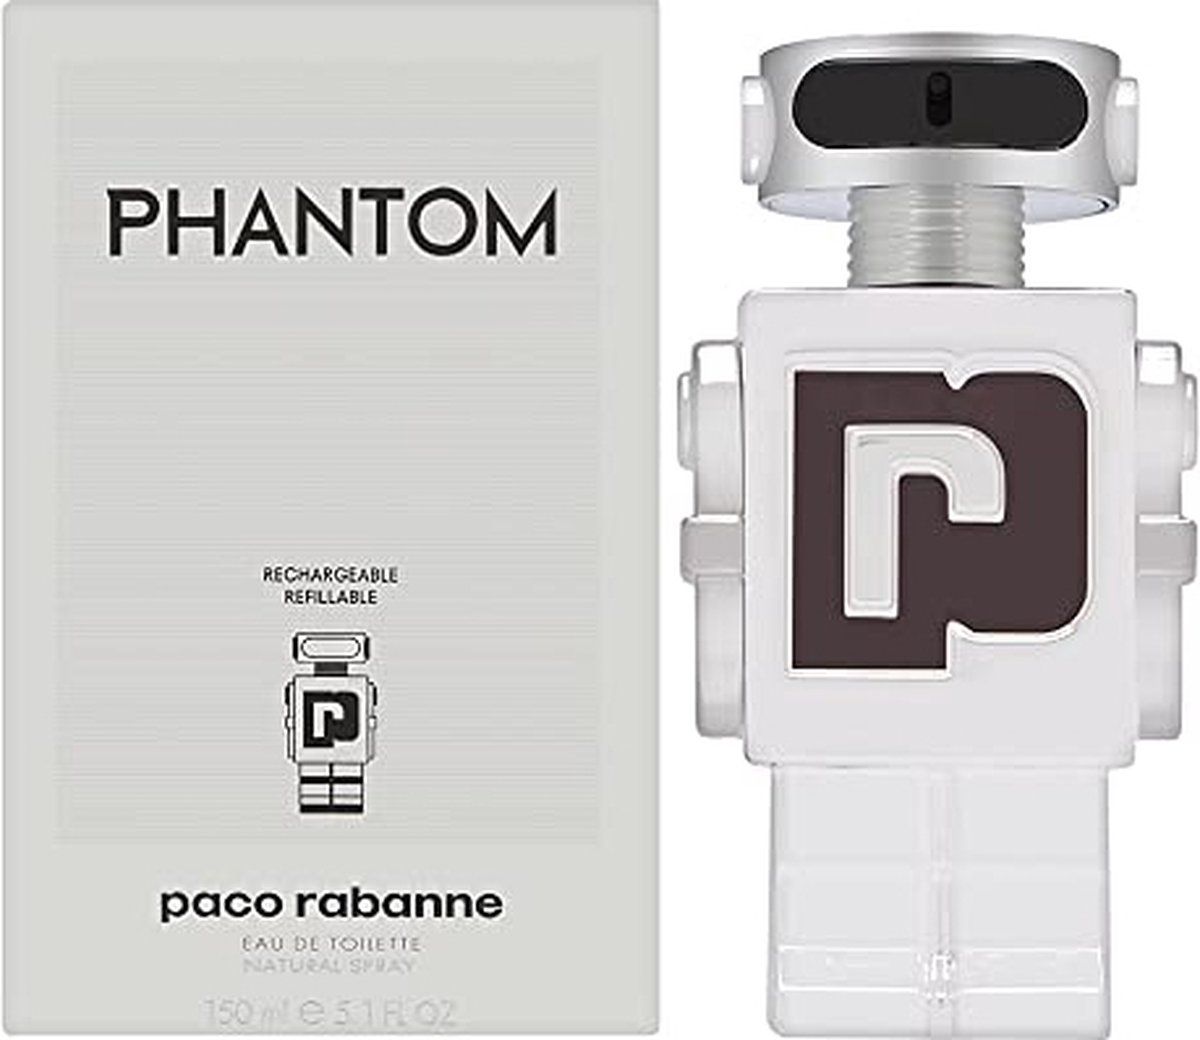 Paco Rabanne Phantom Eau de toilette spray 150 ml